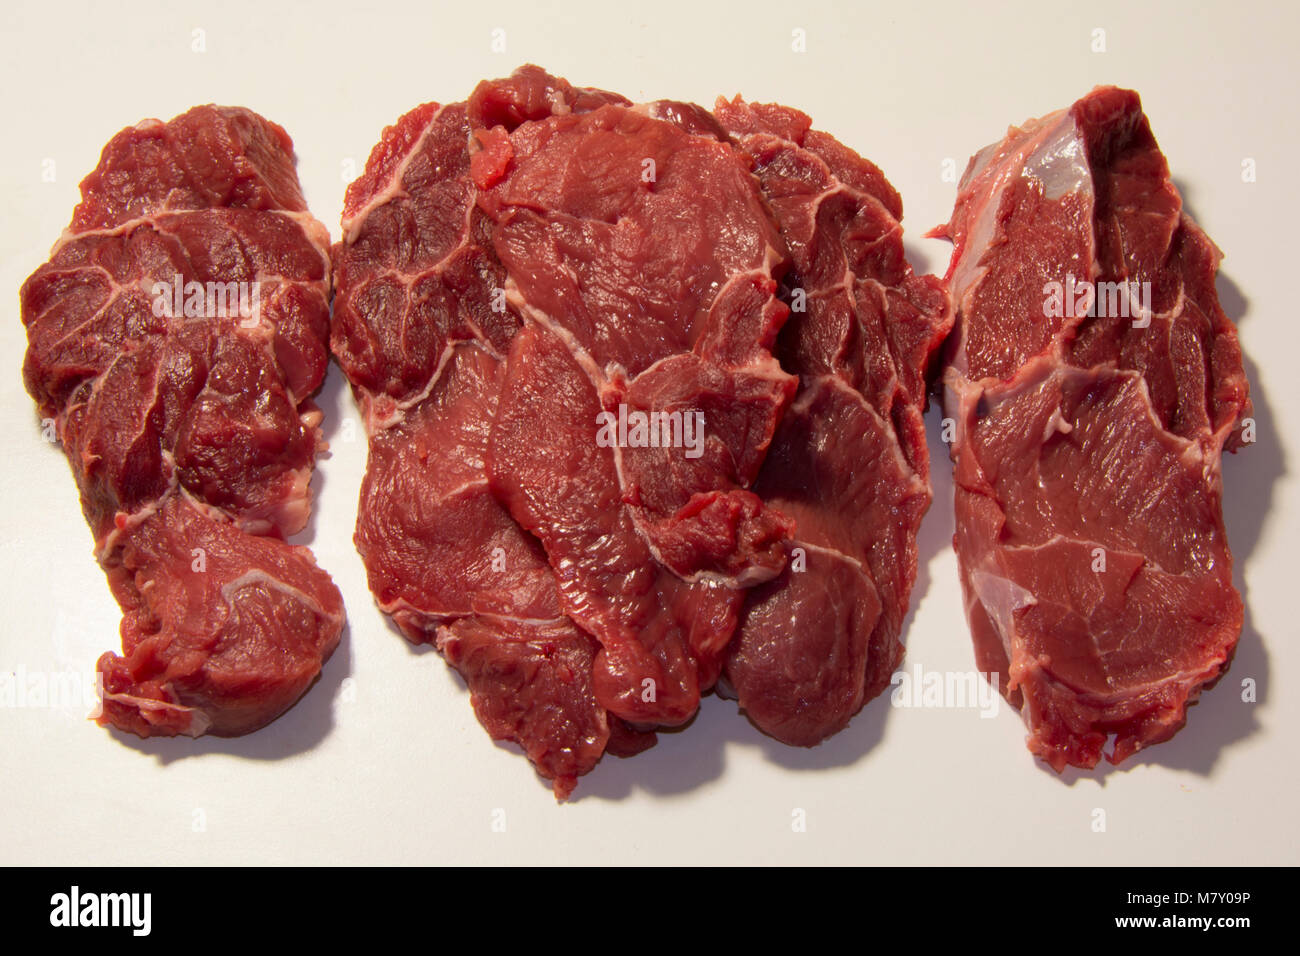 Equino steak raw meat on white background Stock Photo